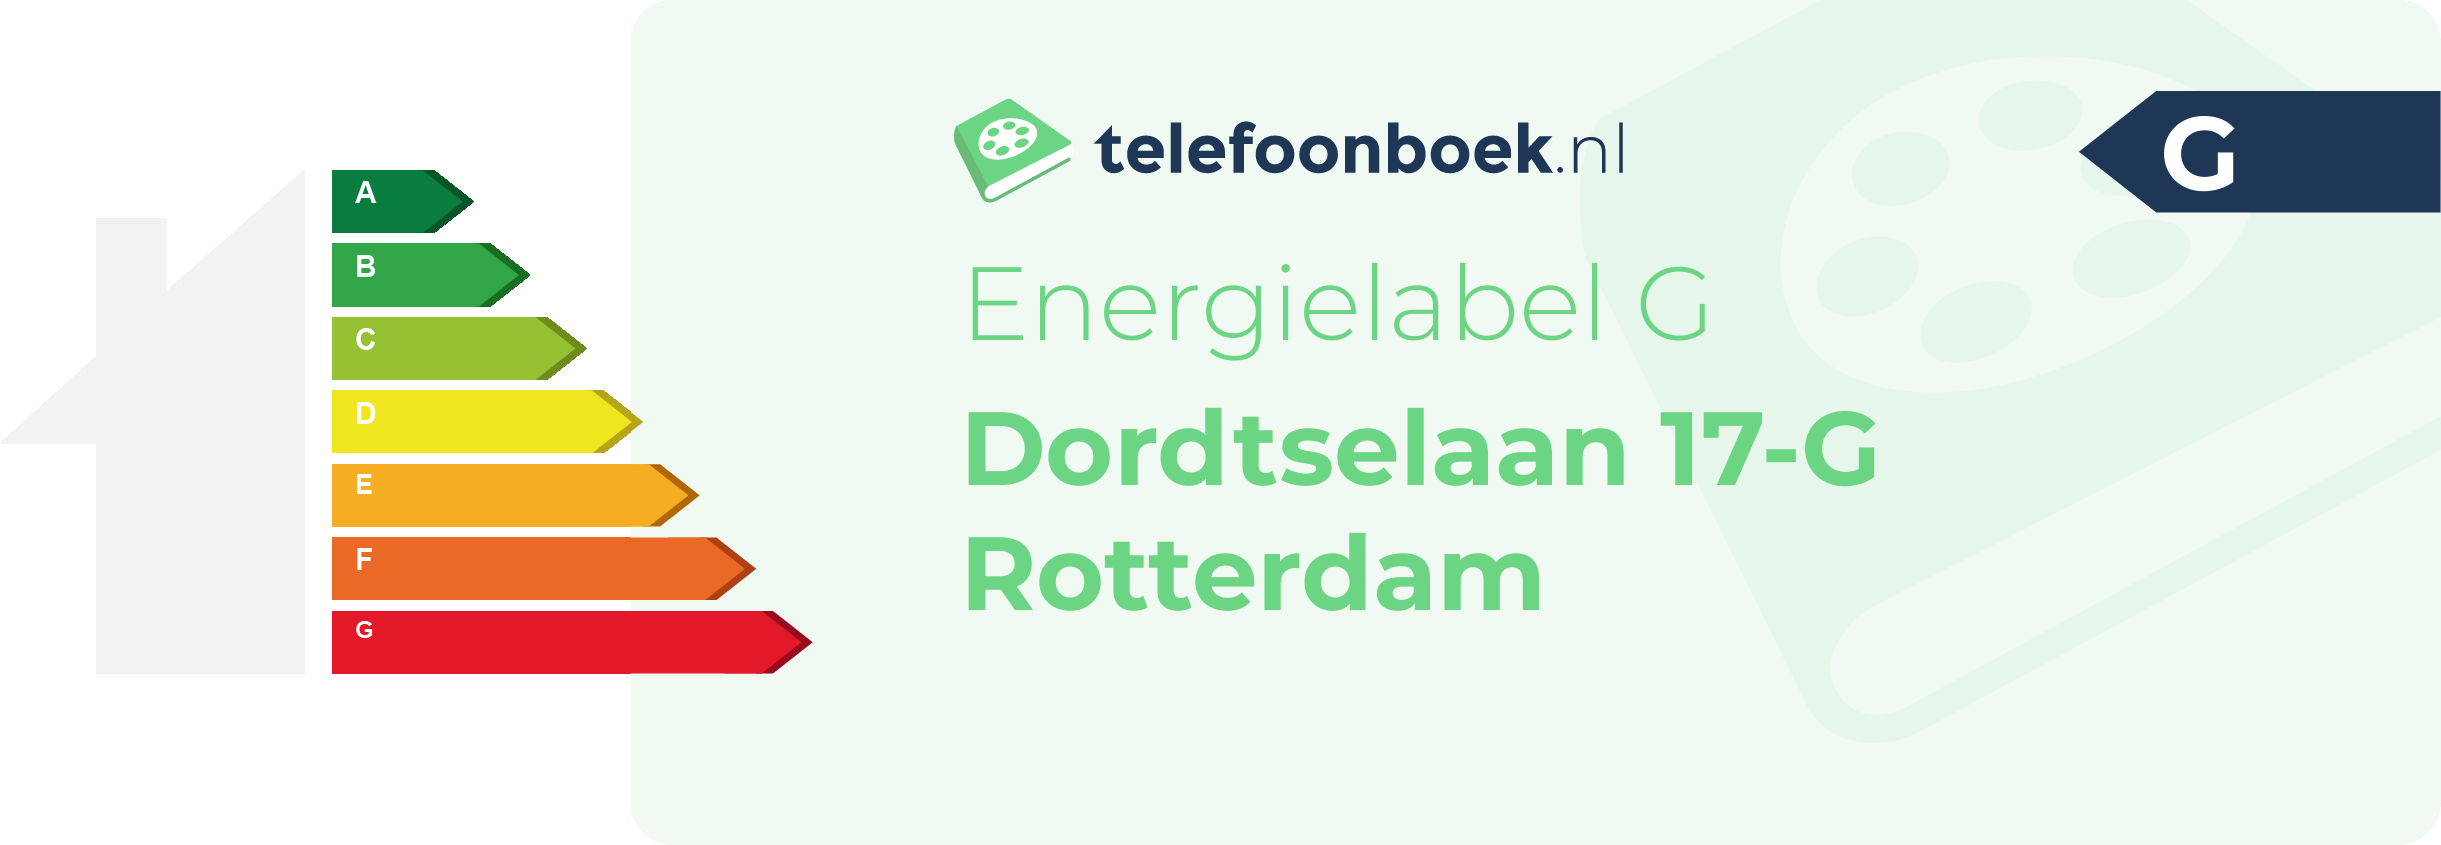 Energielabel Dordtselaan 17-G Rotterdam